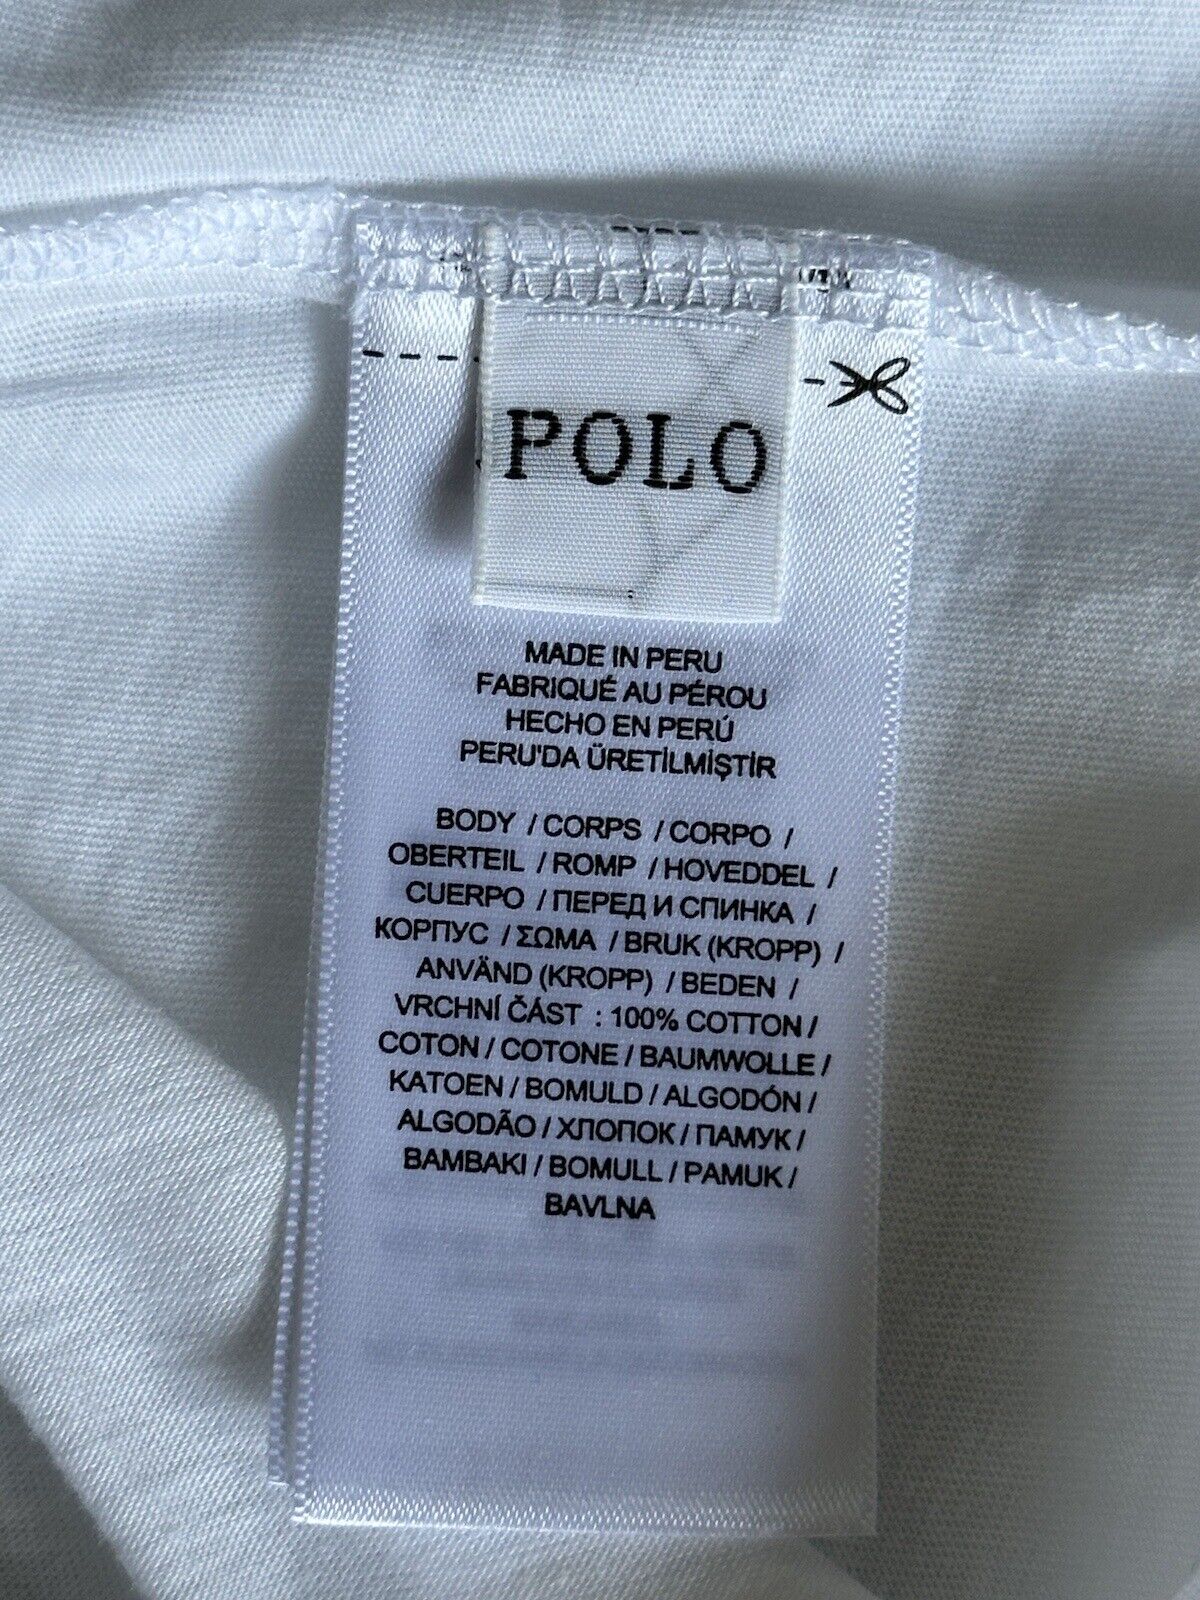 Neu mit Etikett: 110 $ Polo Ralph Lauren Bear Weißes langärmliges Baumwoll-T-Shirt-Oberteil XL